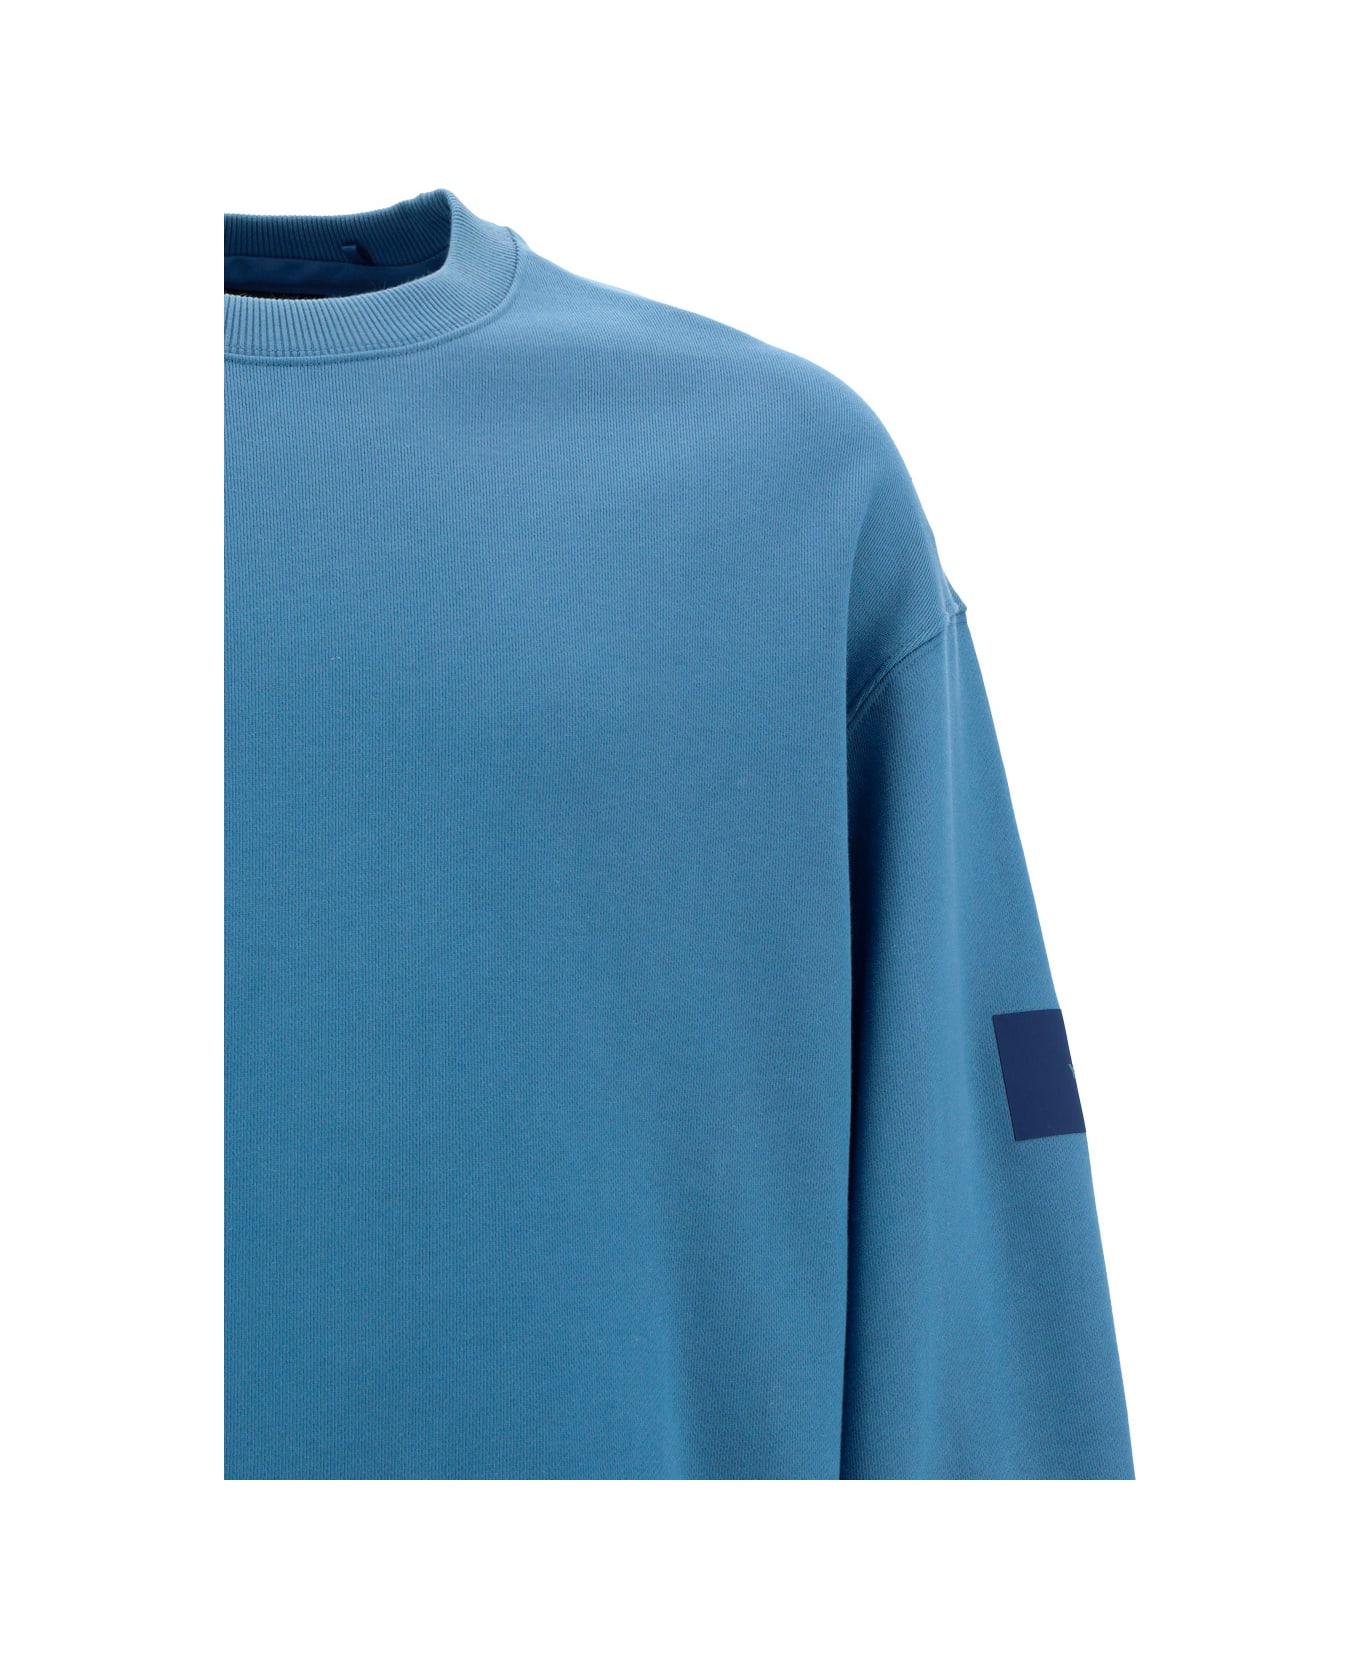 Y-3 Sweatshirt - Altered Blue